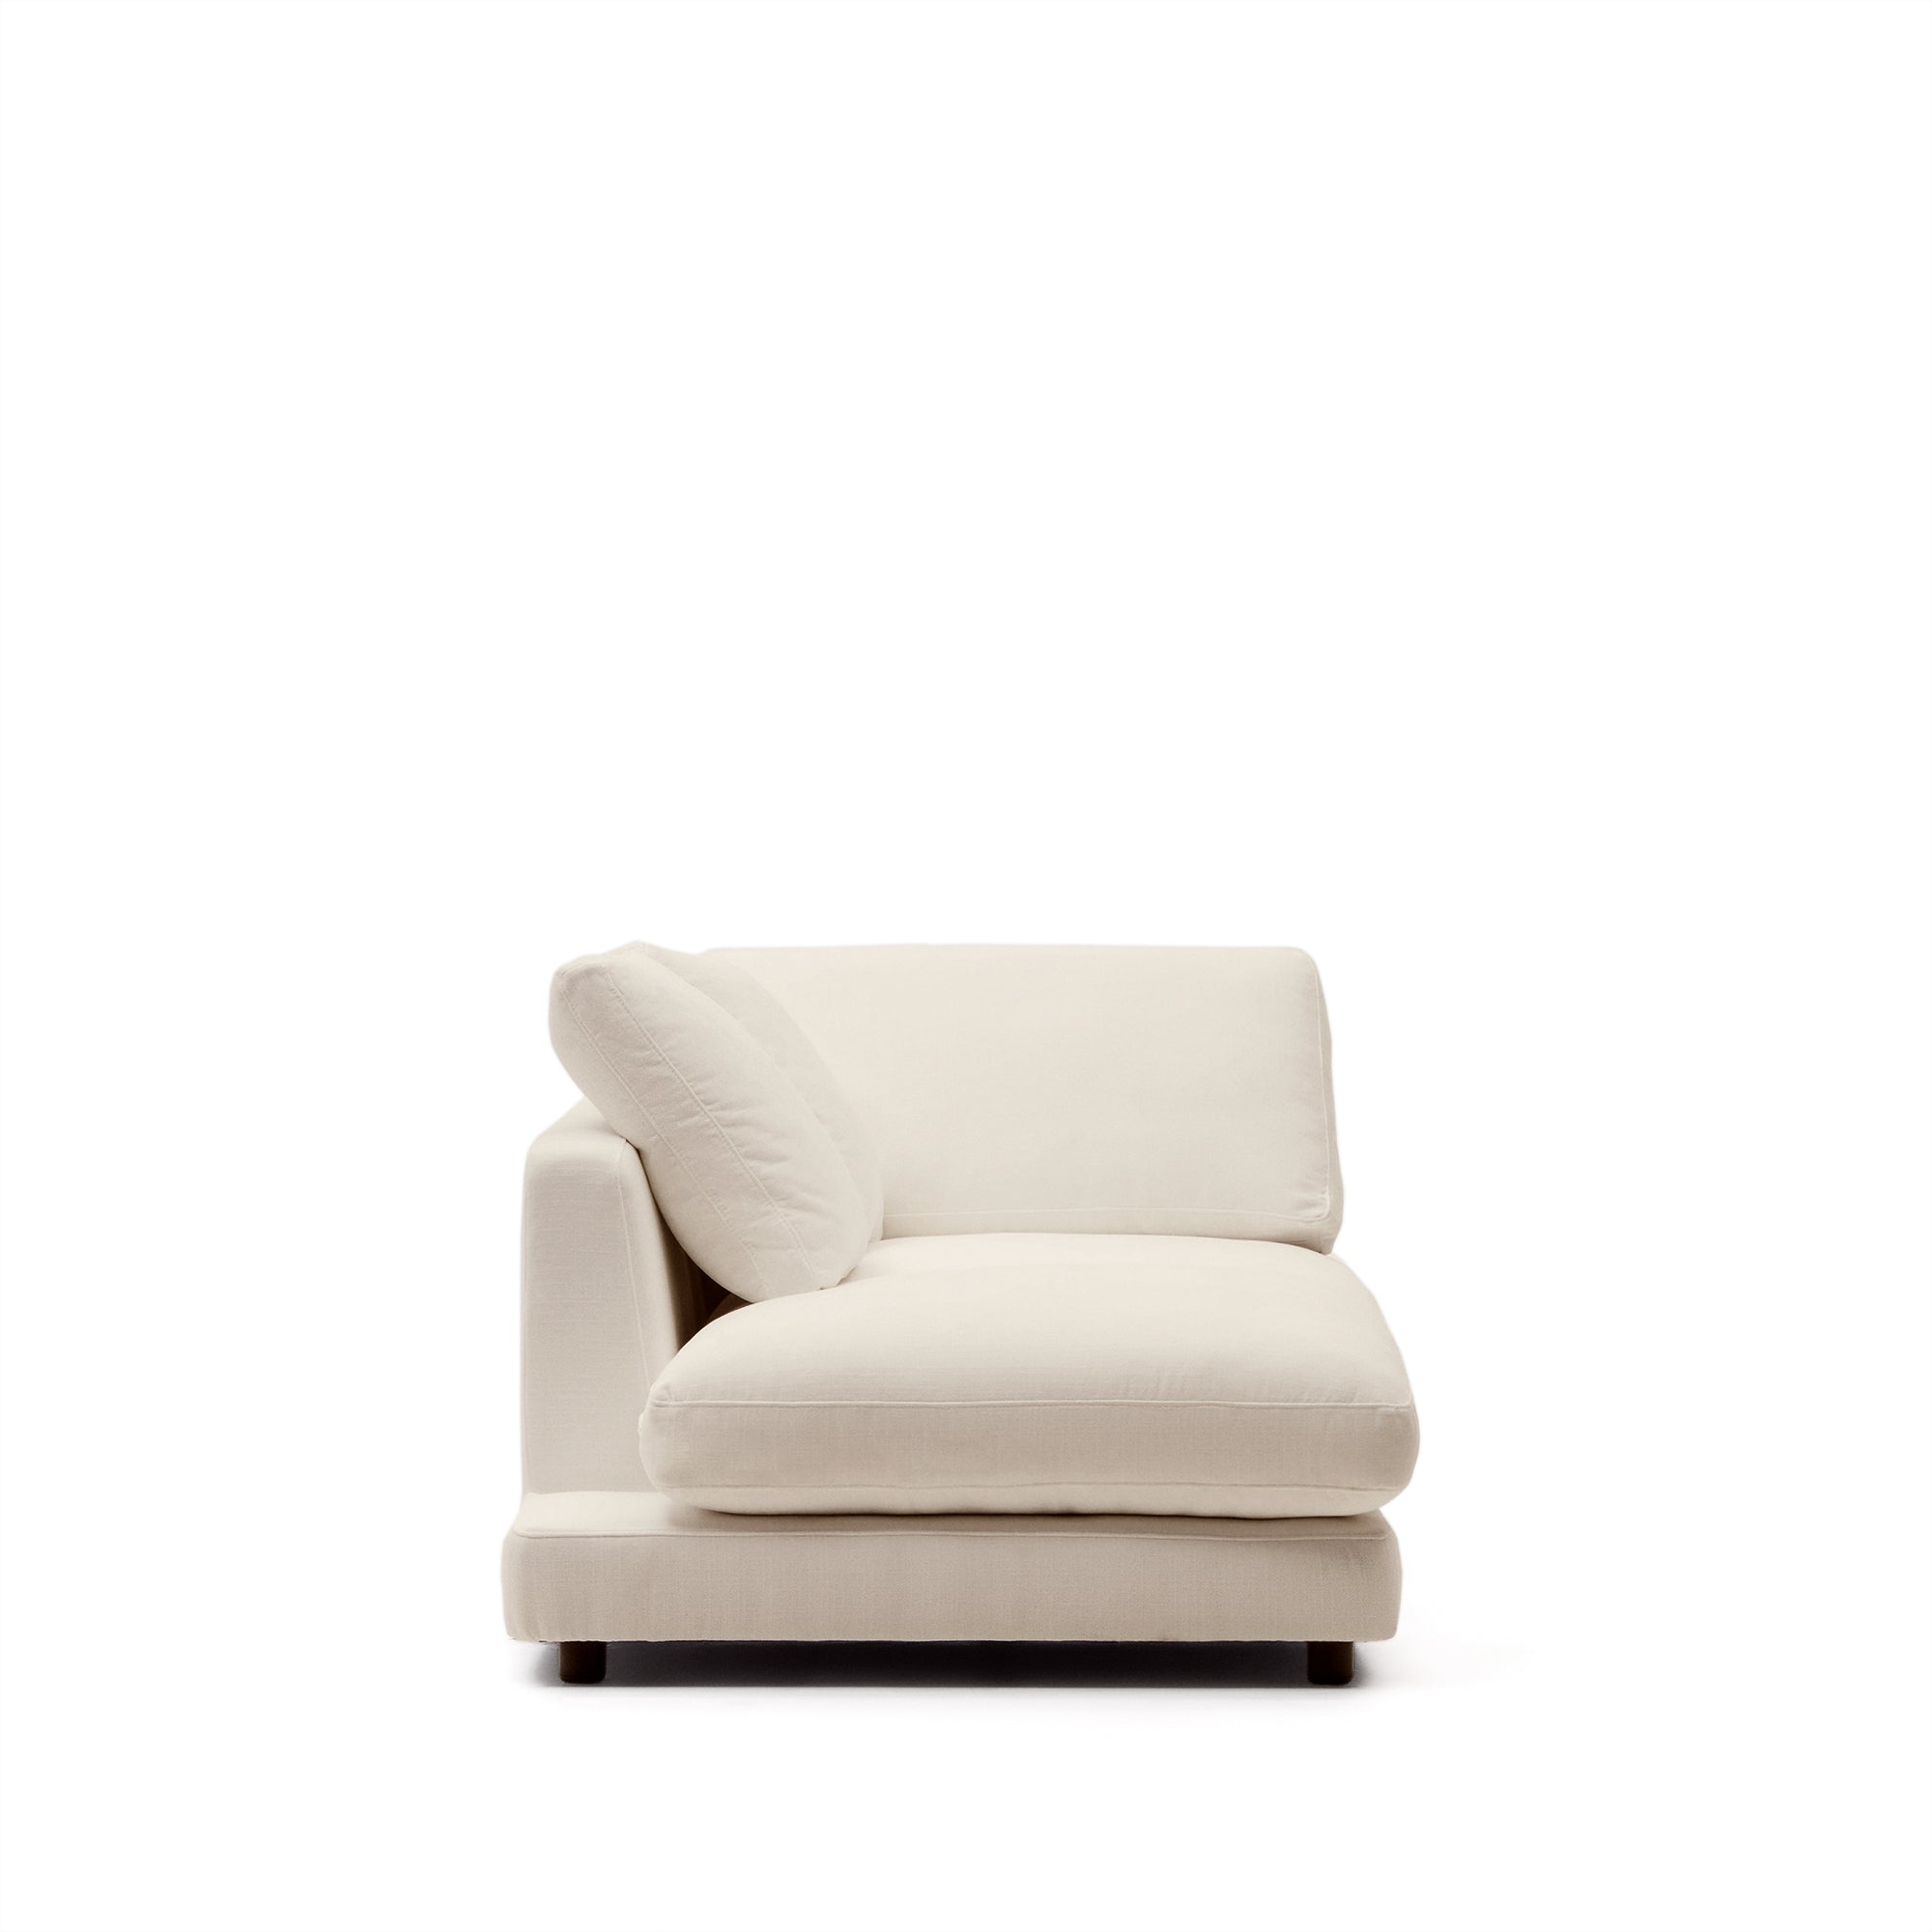 Gala left chaise longue in beige, 193 x 105 cm